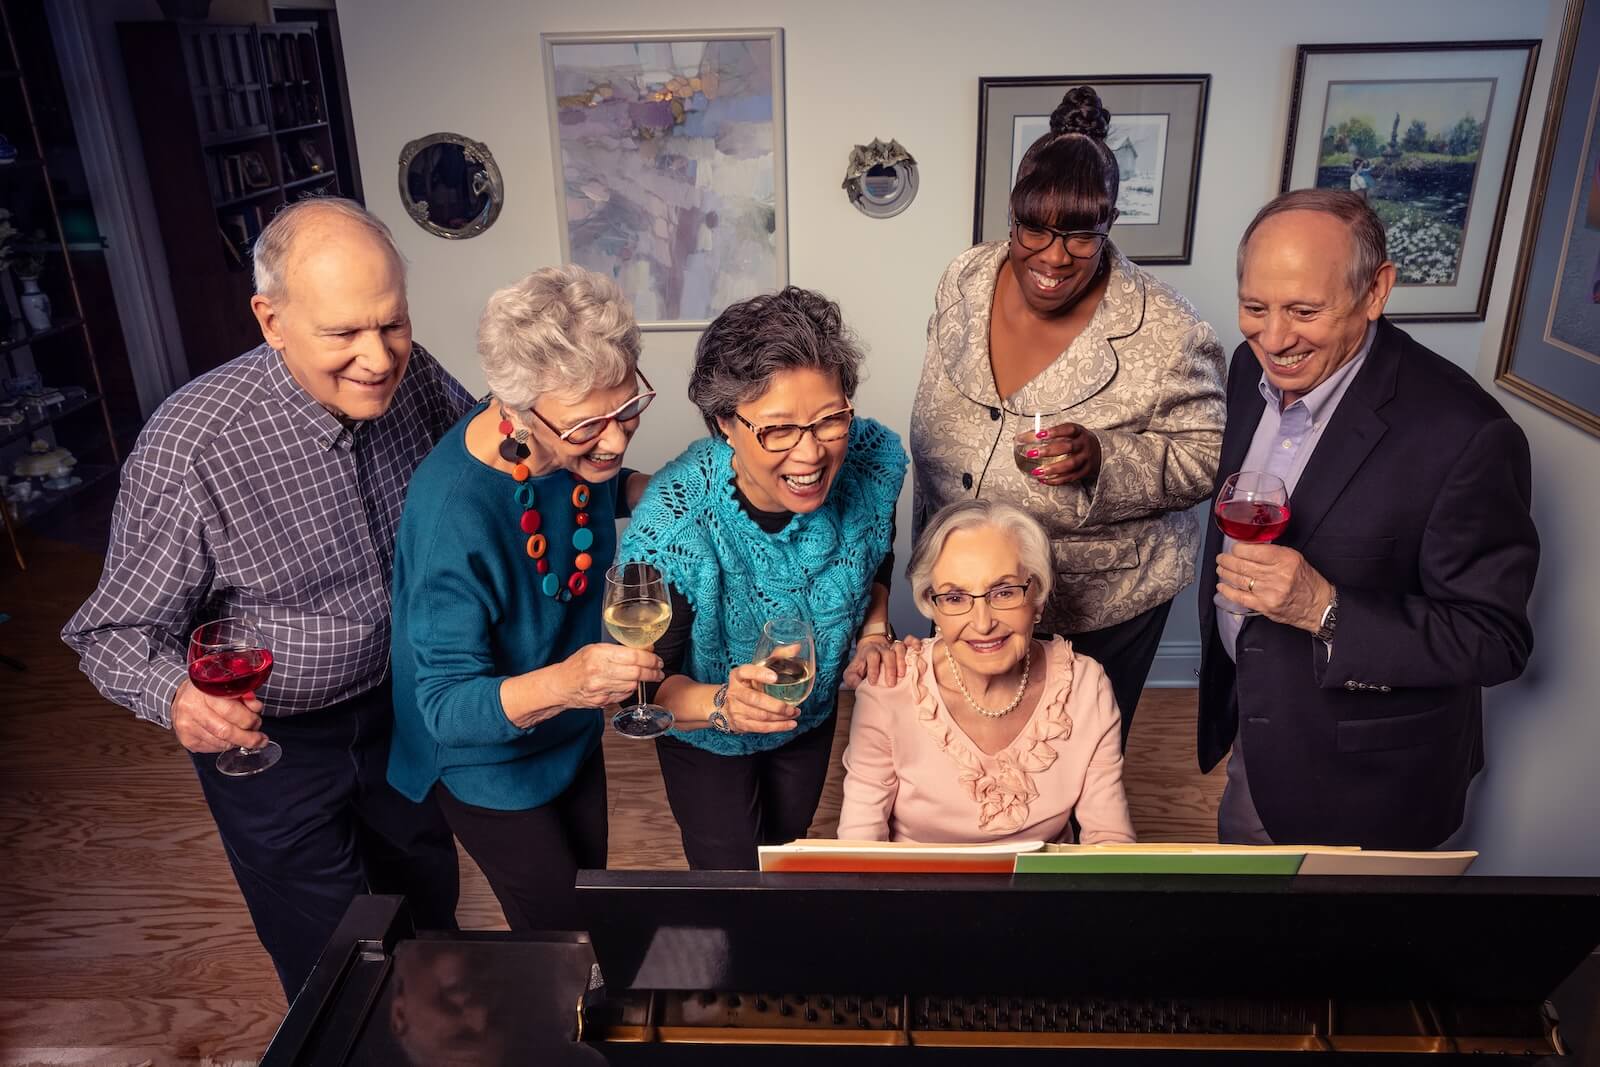 Six seniors with drinks gathered around the piano